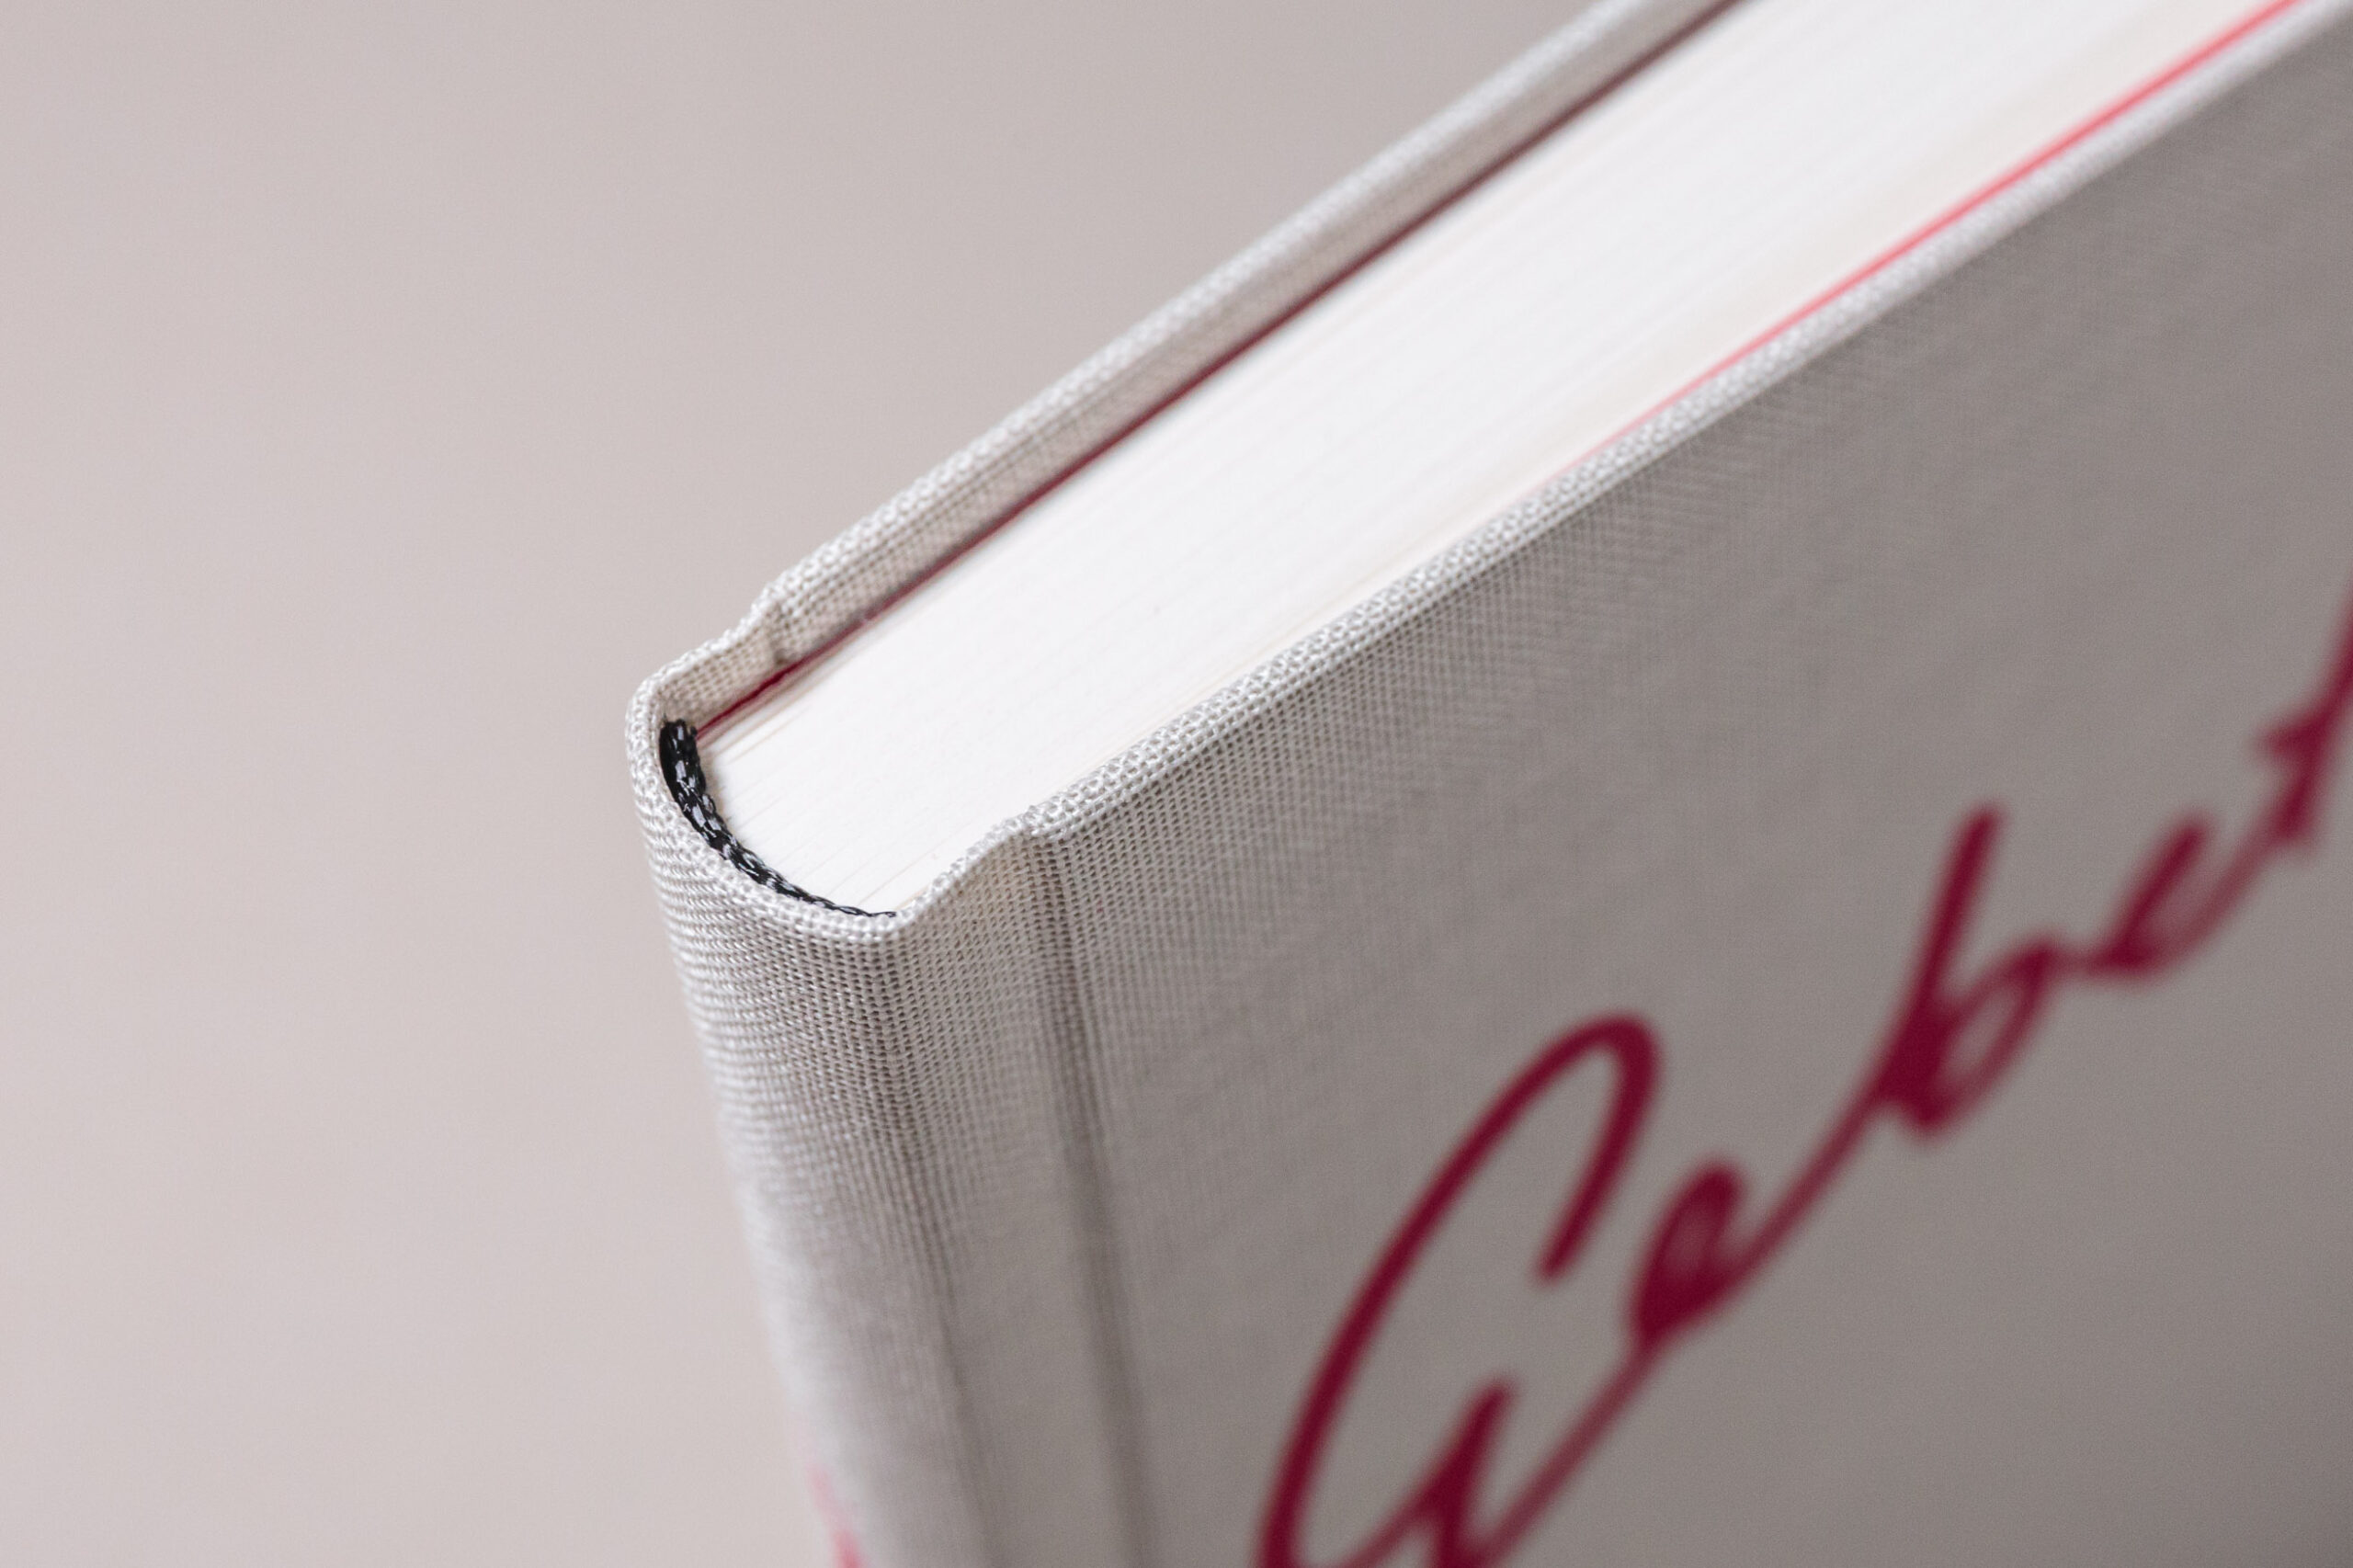 Thread stitching an warm grey linen binding on the German prayer book “Gebet!”. Designed by Johannes Pistorius.